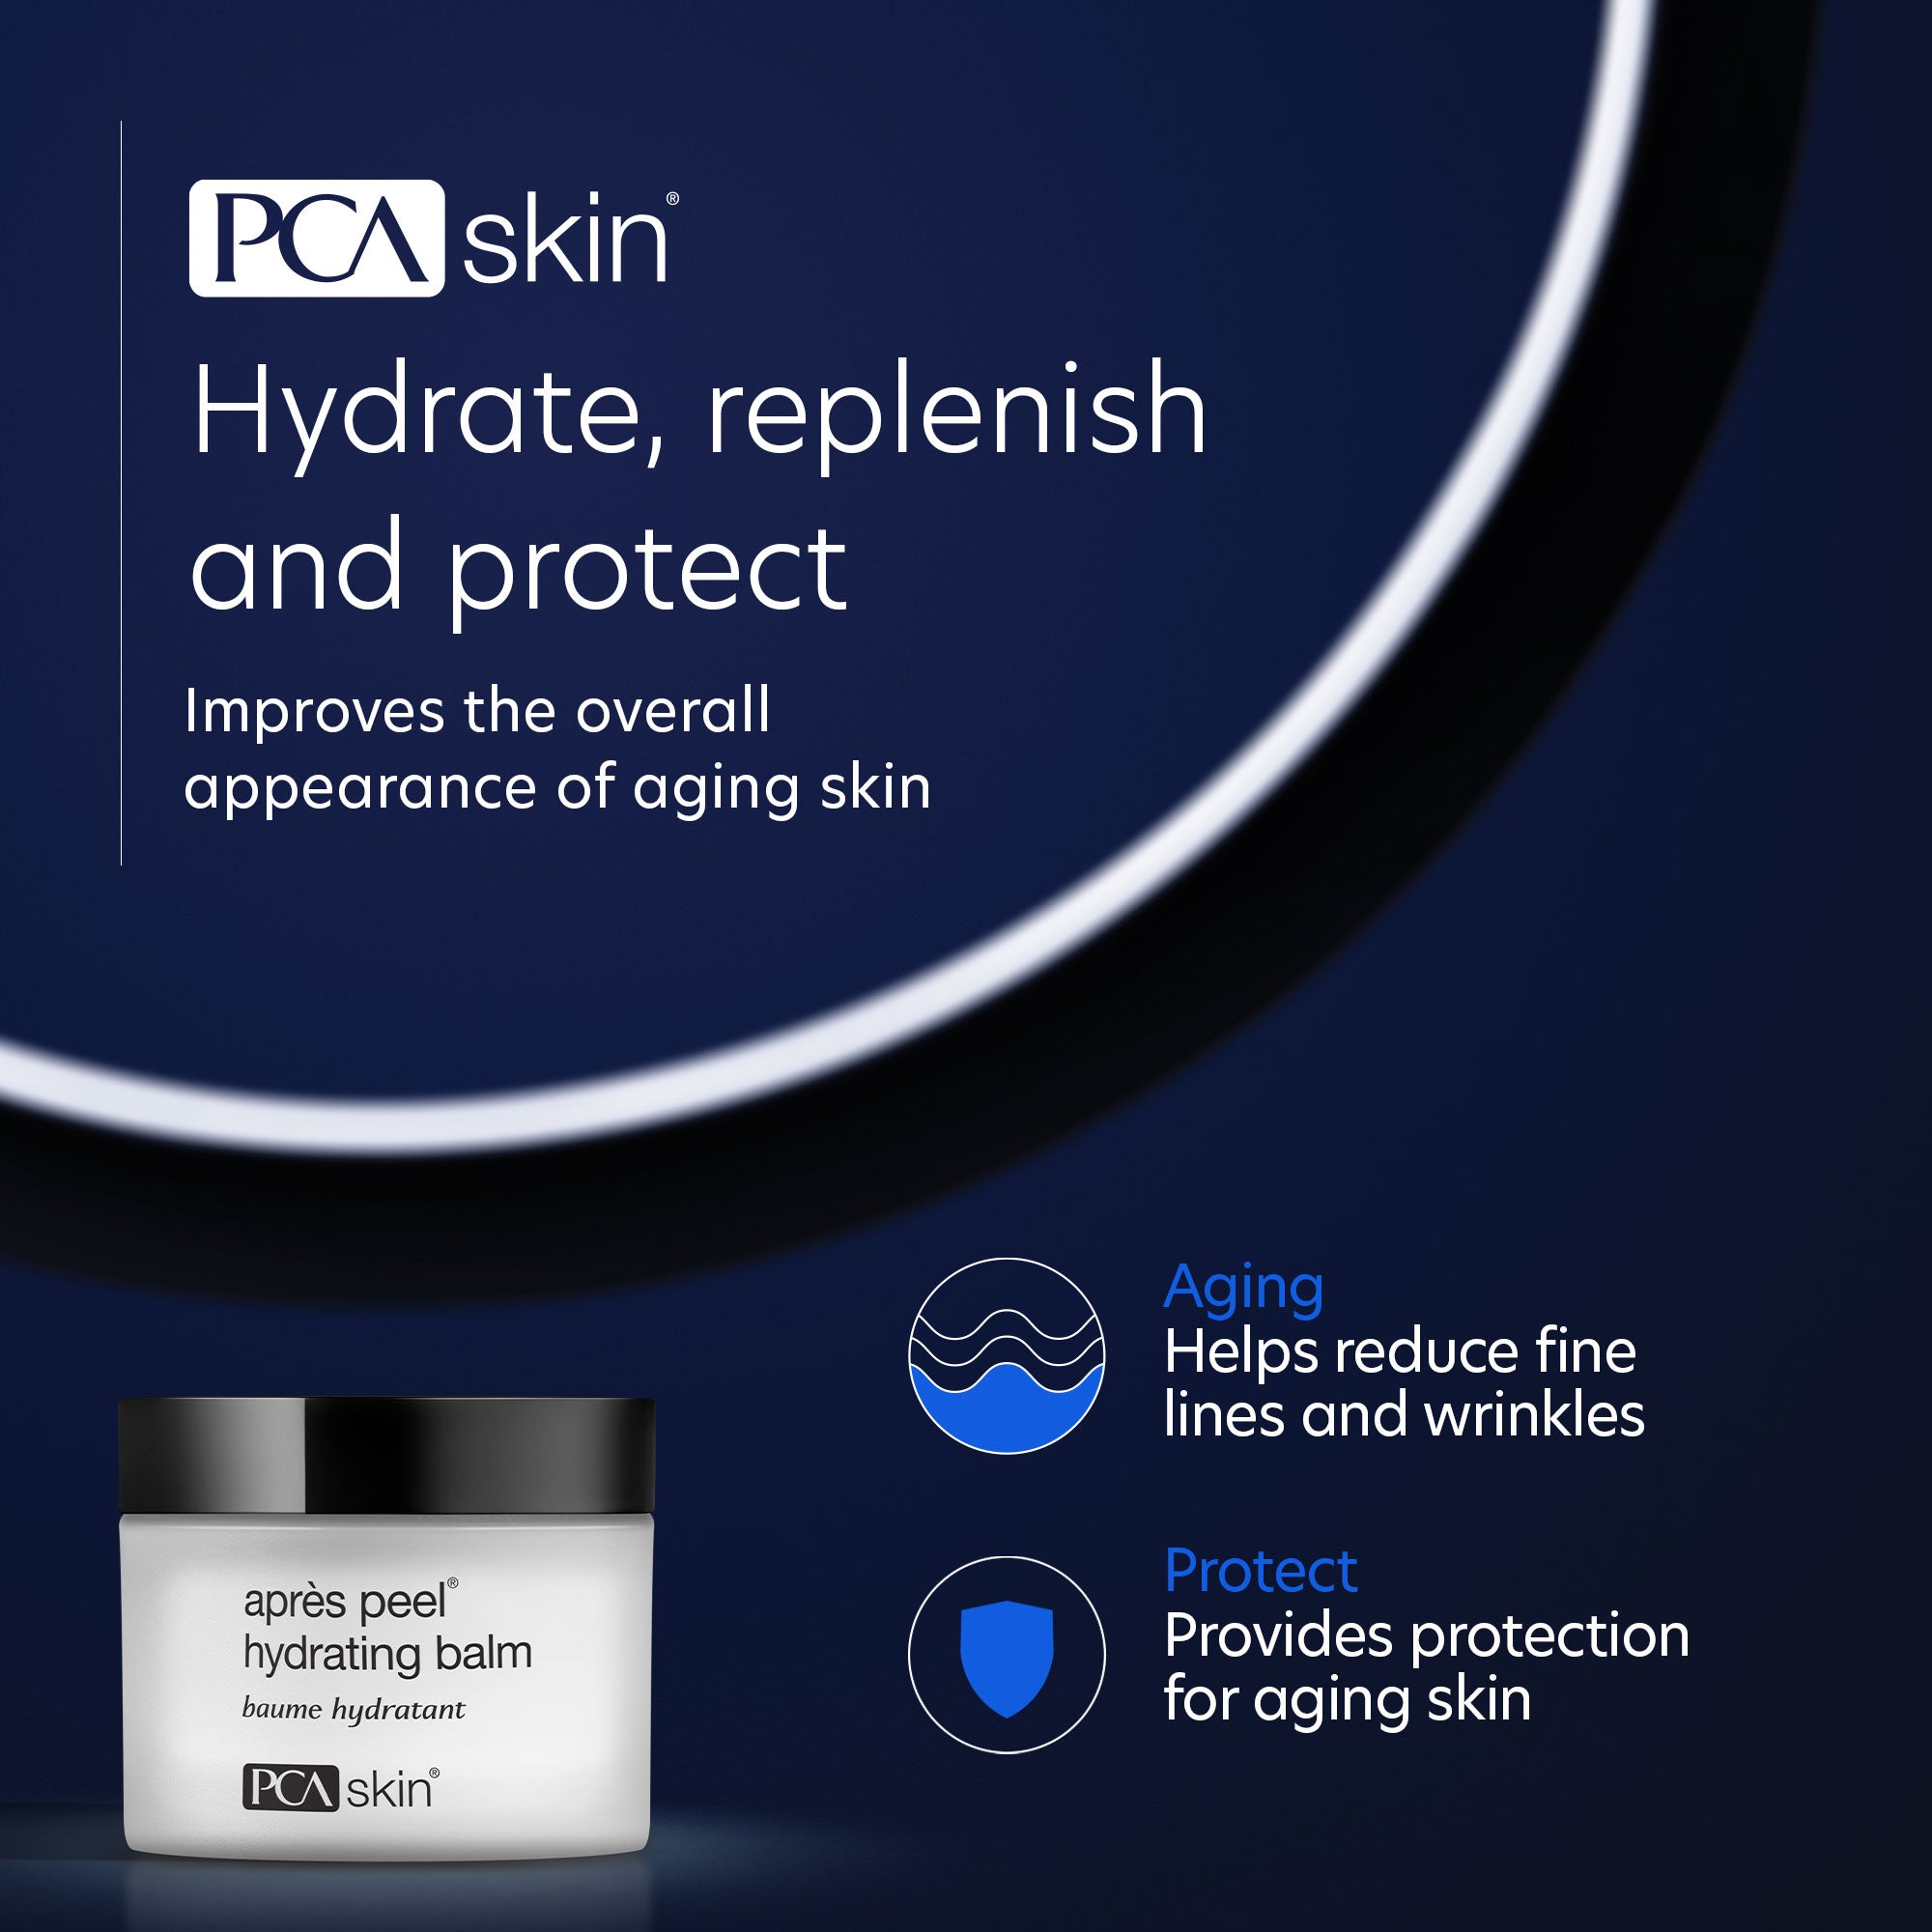 PCA Skin Apres Peel Balm idratan (1.7 oz)